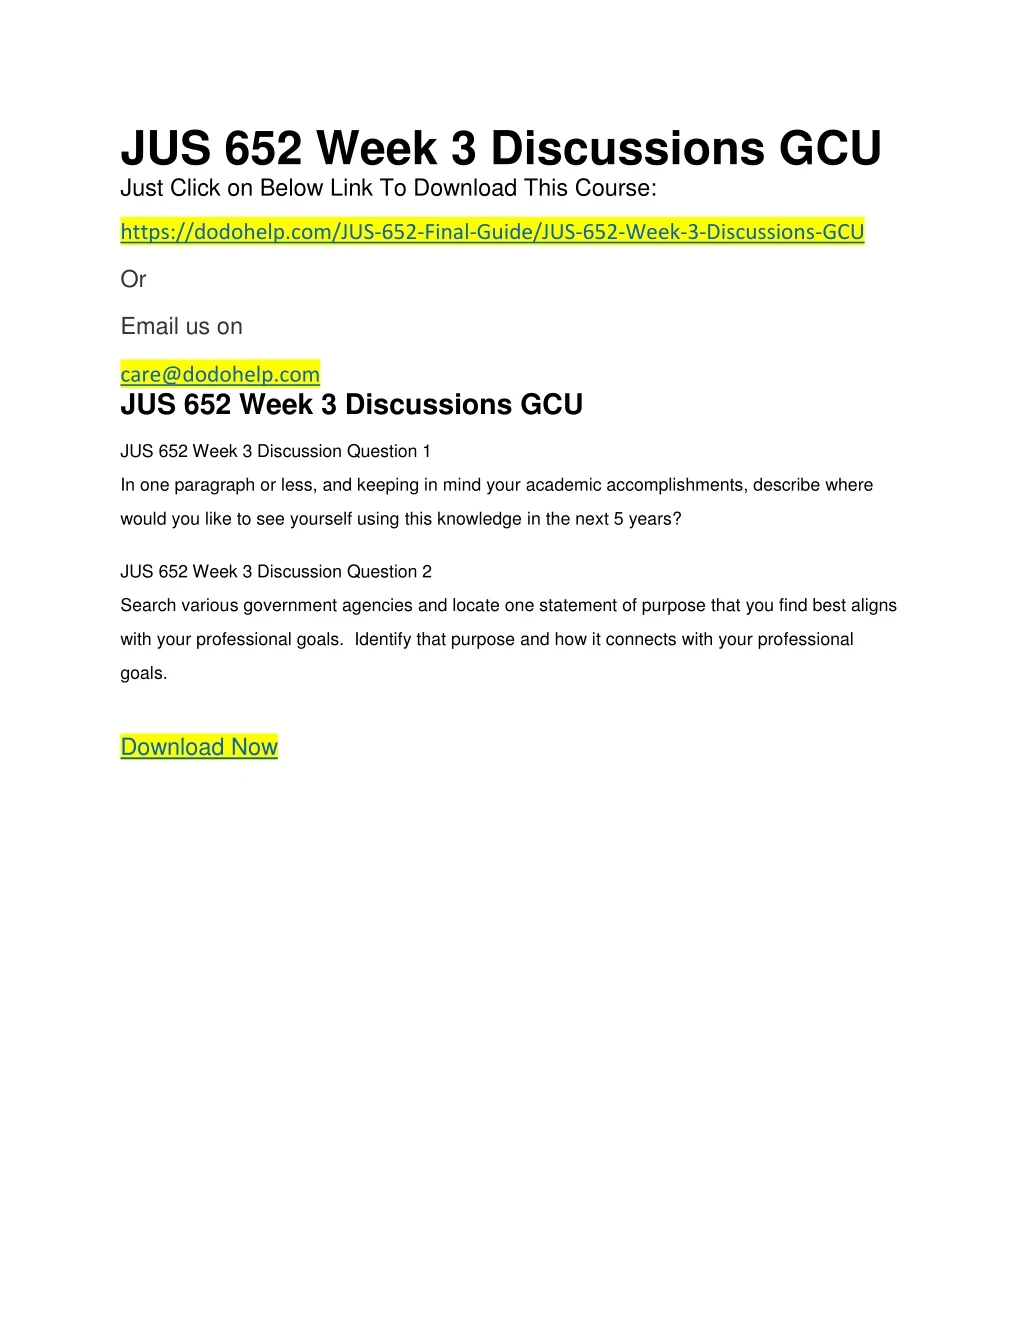 jus 652 week 3 discussions gcu just click